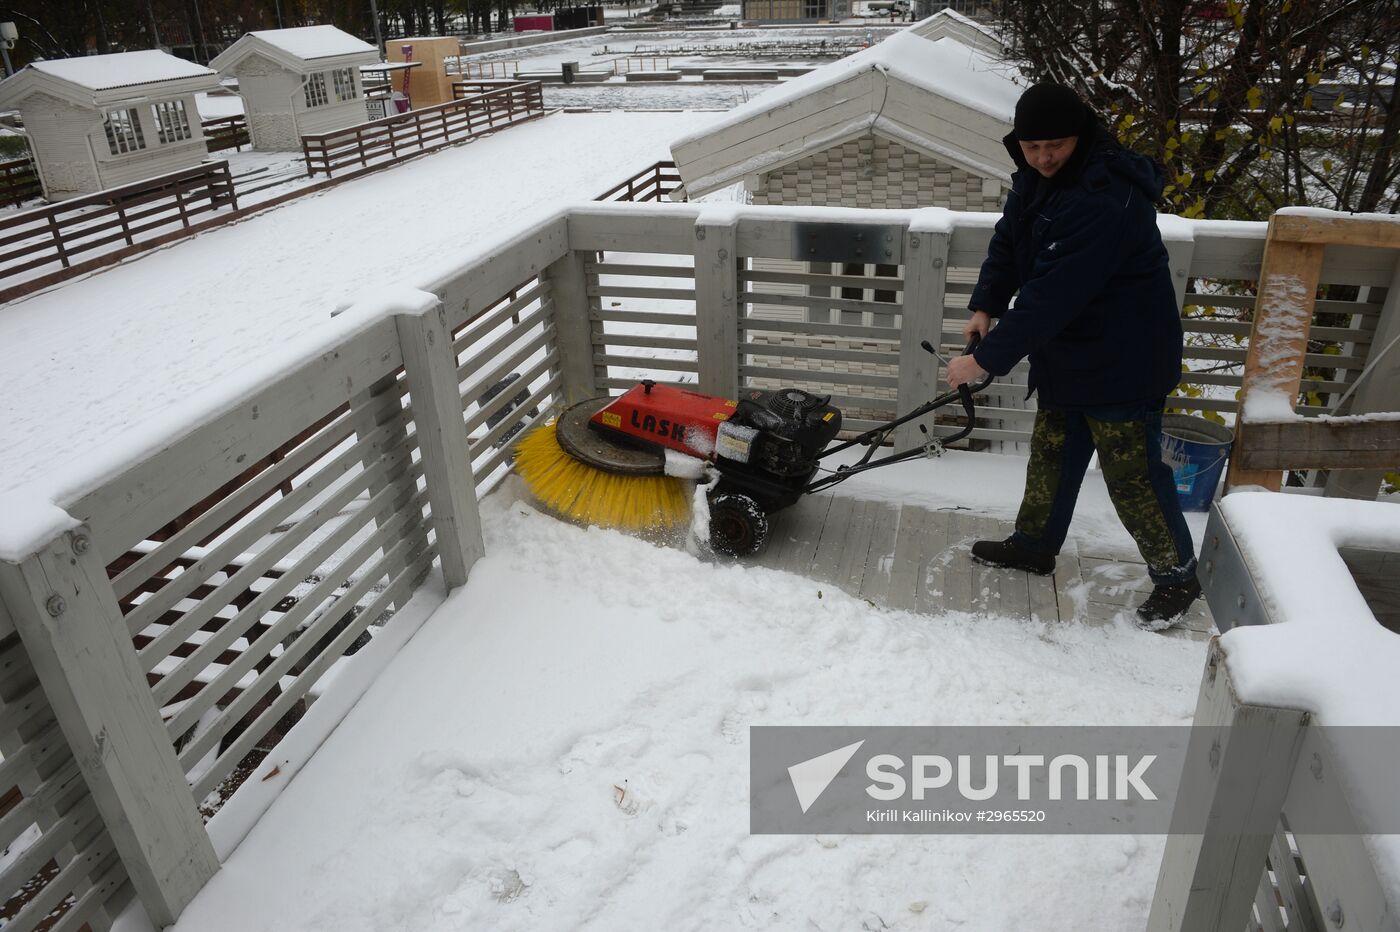 Getting Gorki Park skating rink ready for winter